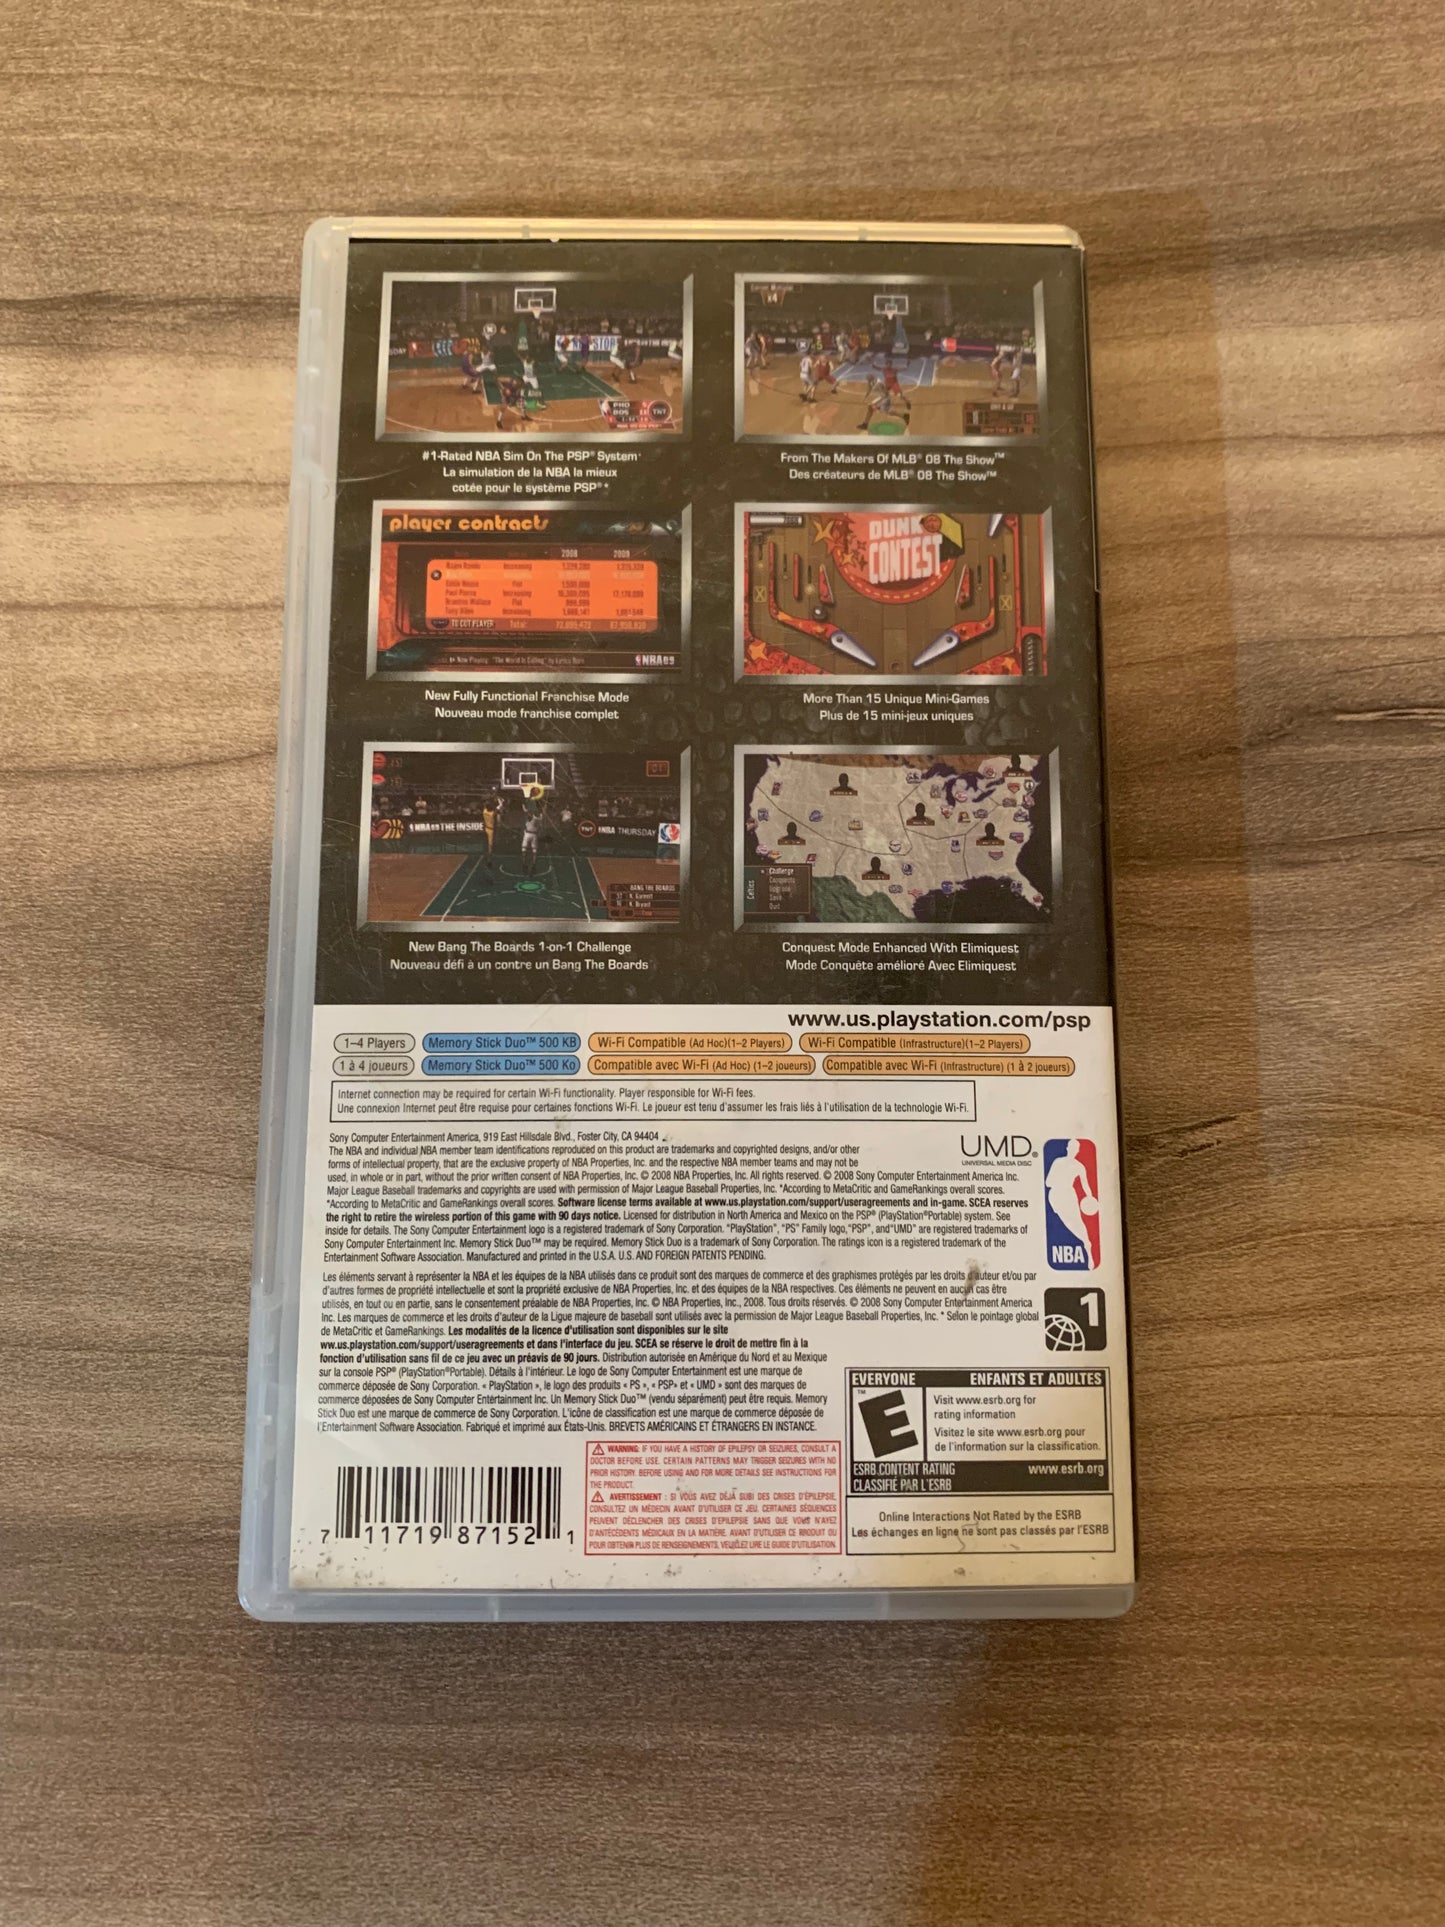 SONY PLAYSTATiON PORTABLE [PSP] | NBA 09 THE iNSiDE